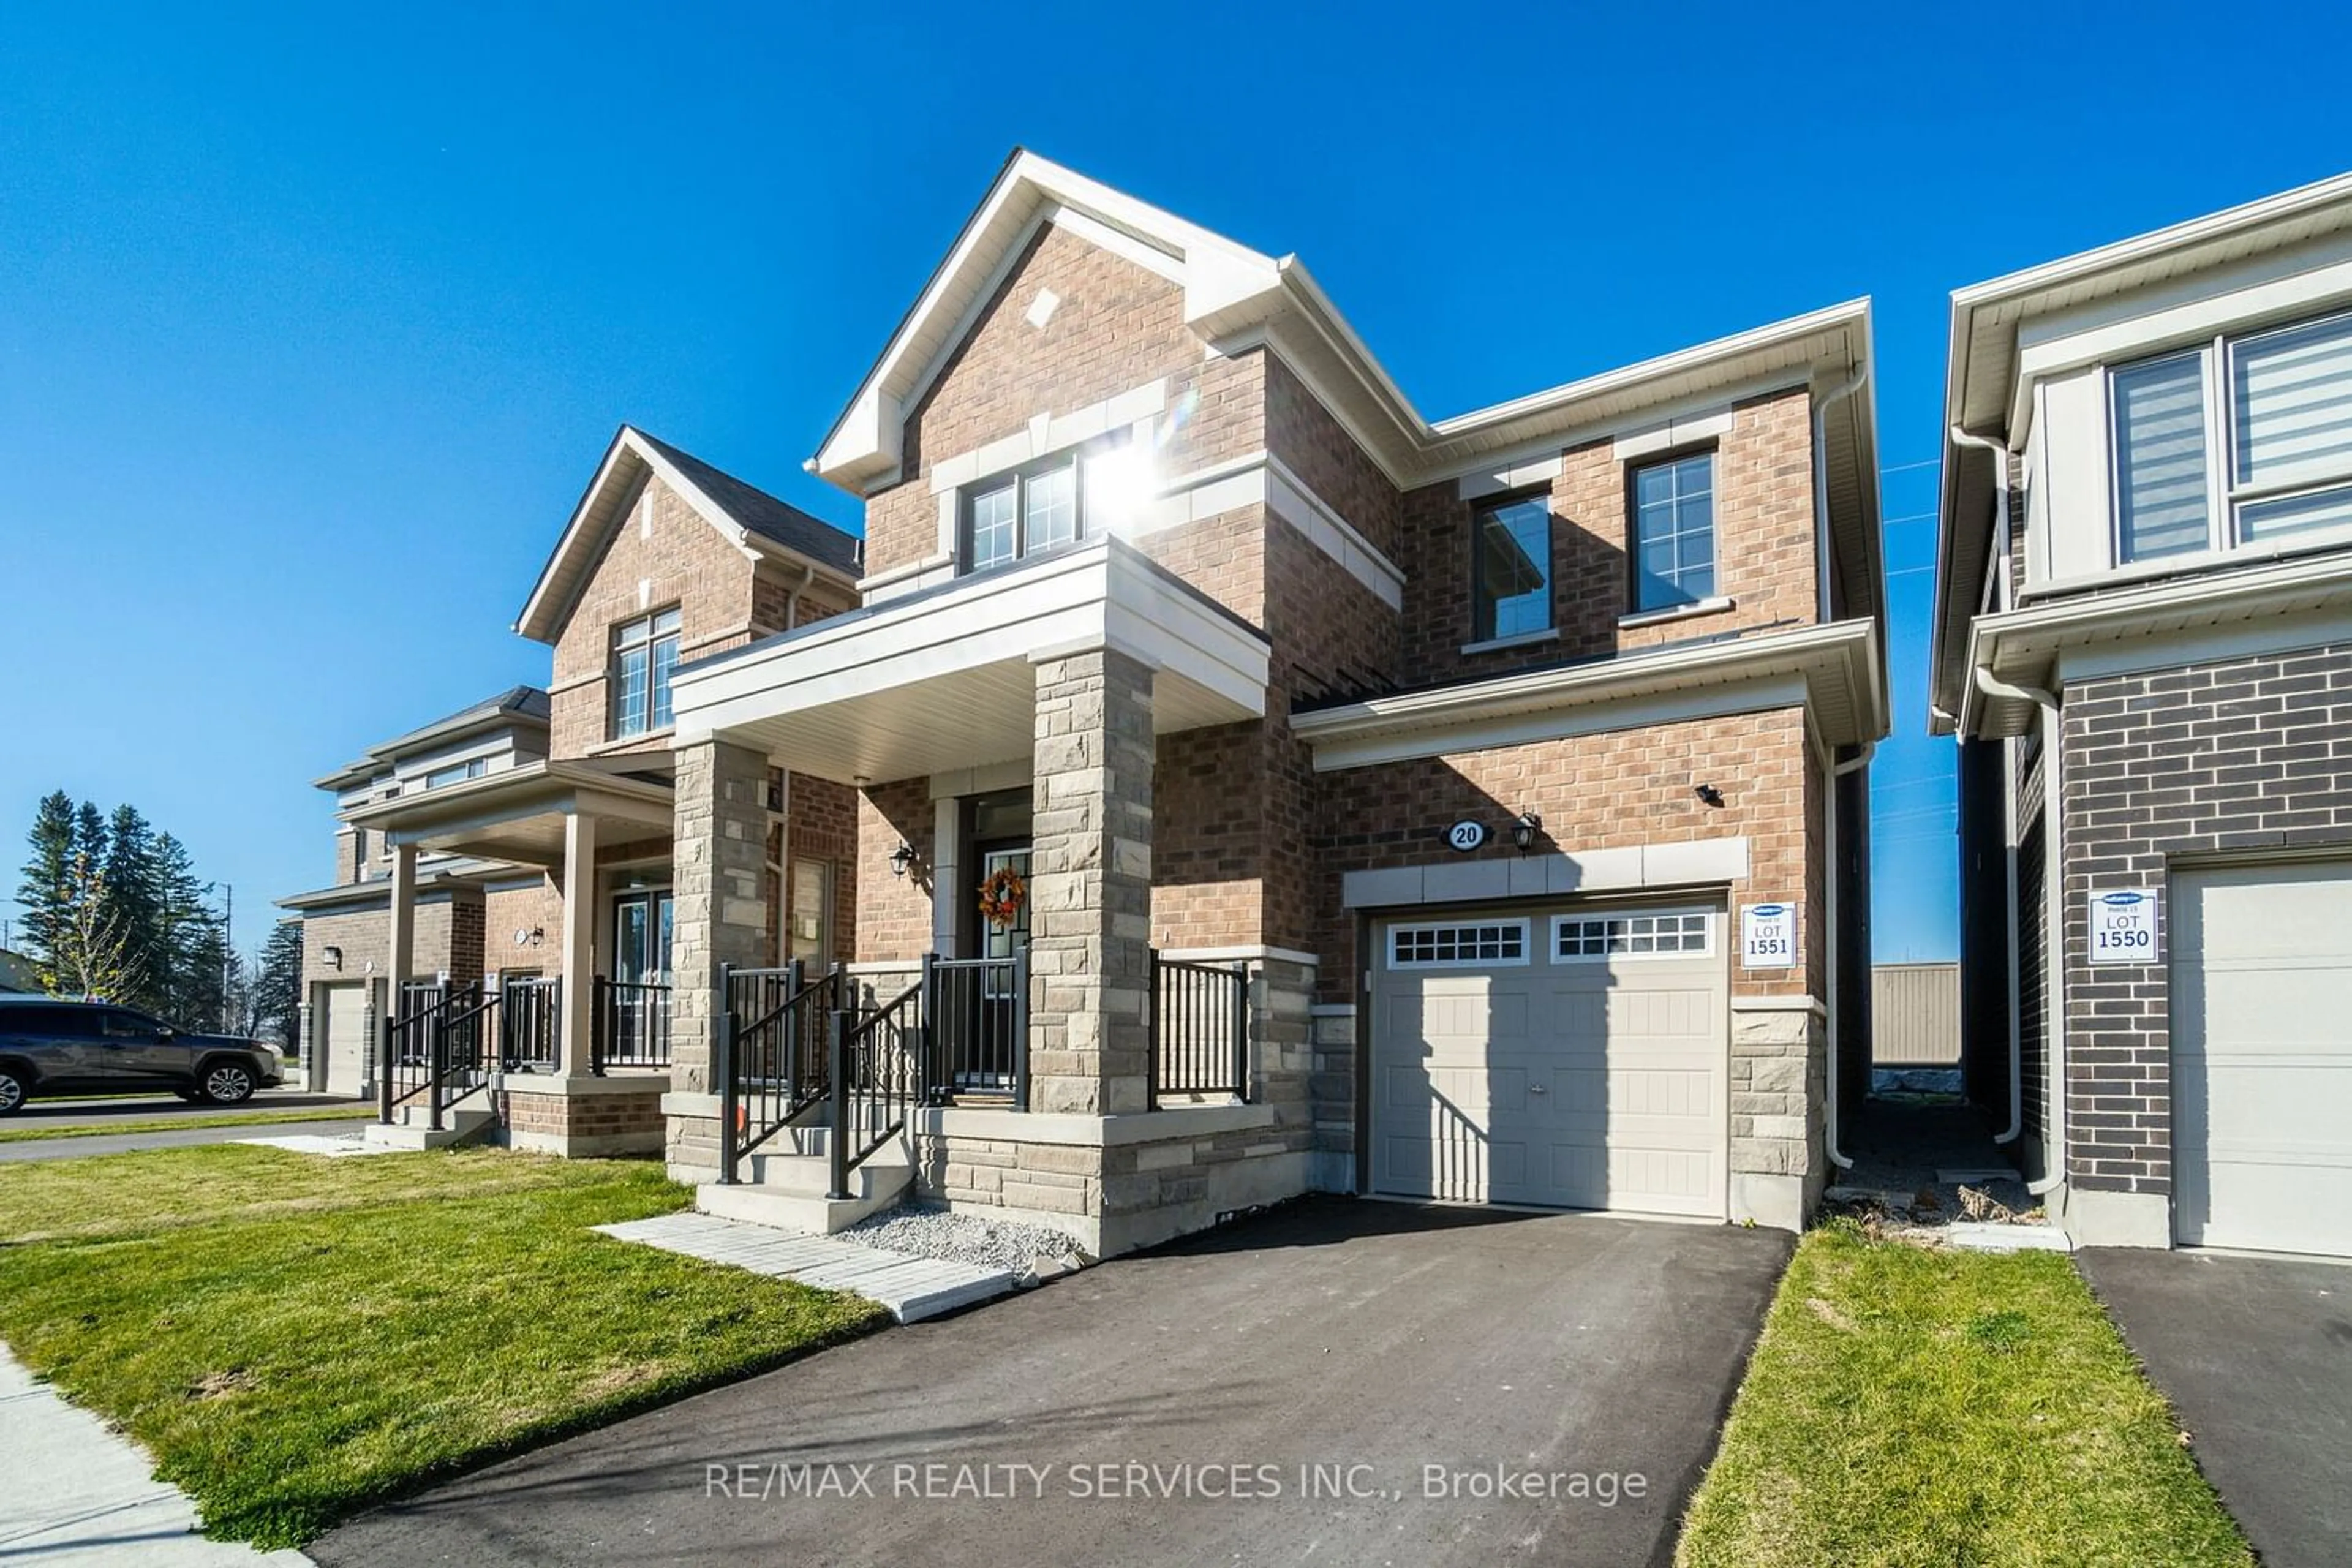 Home with brick exterior material for 20 Callahan Crt, Brampton Ontario L7A 0C2